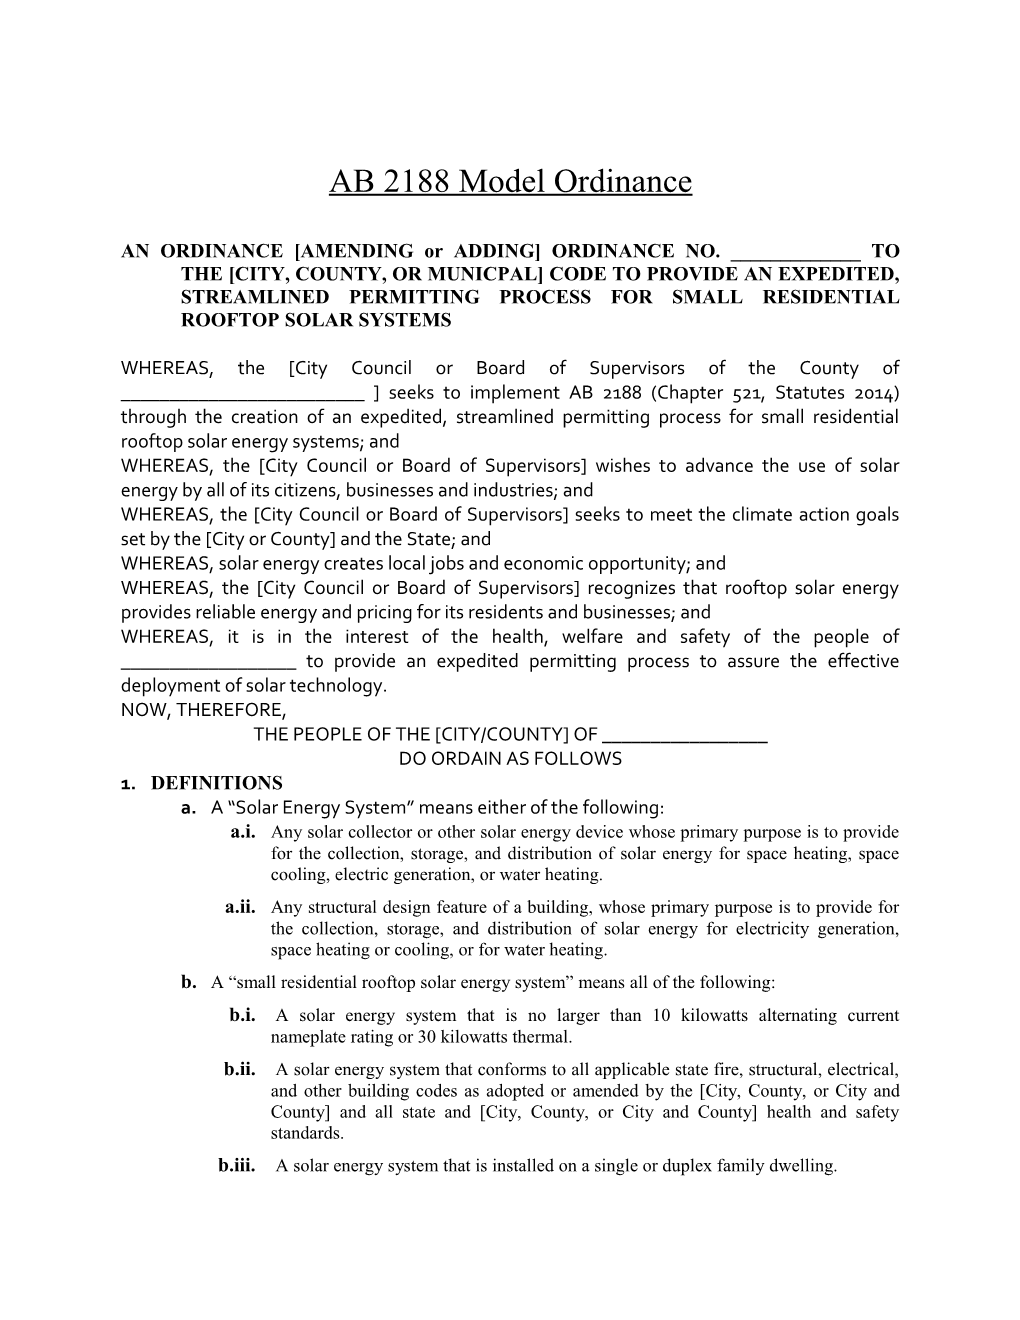 AB 2188 Model Ordinance